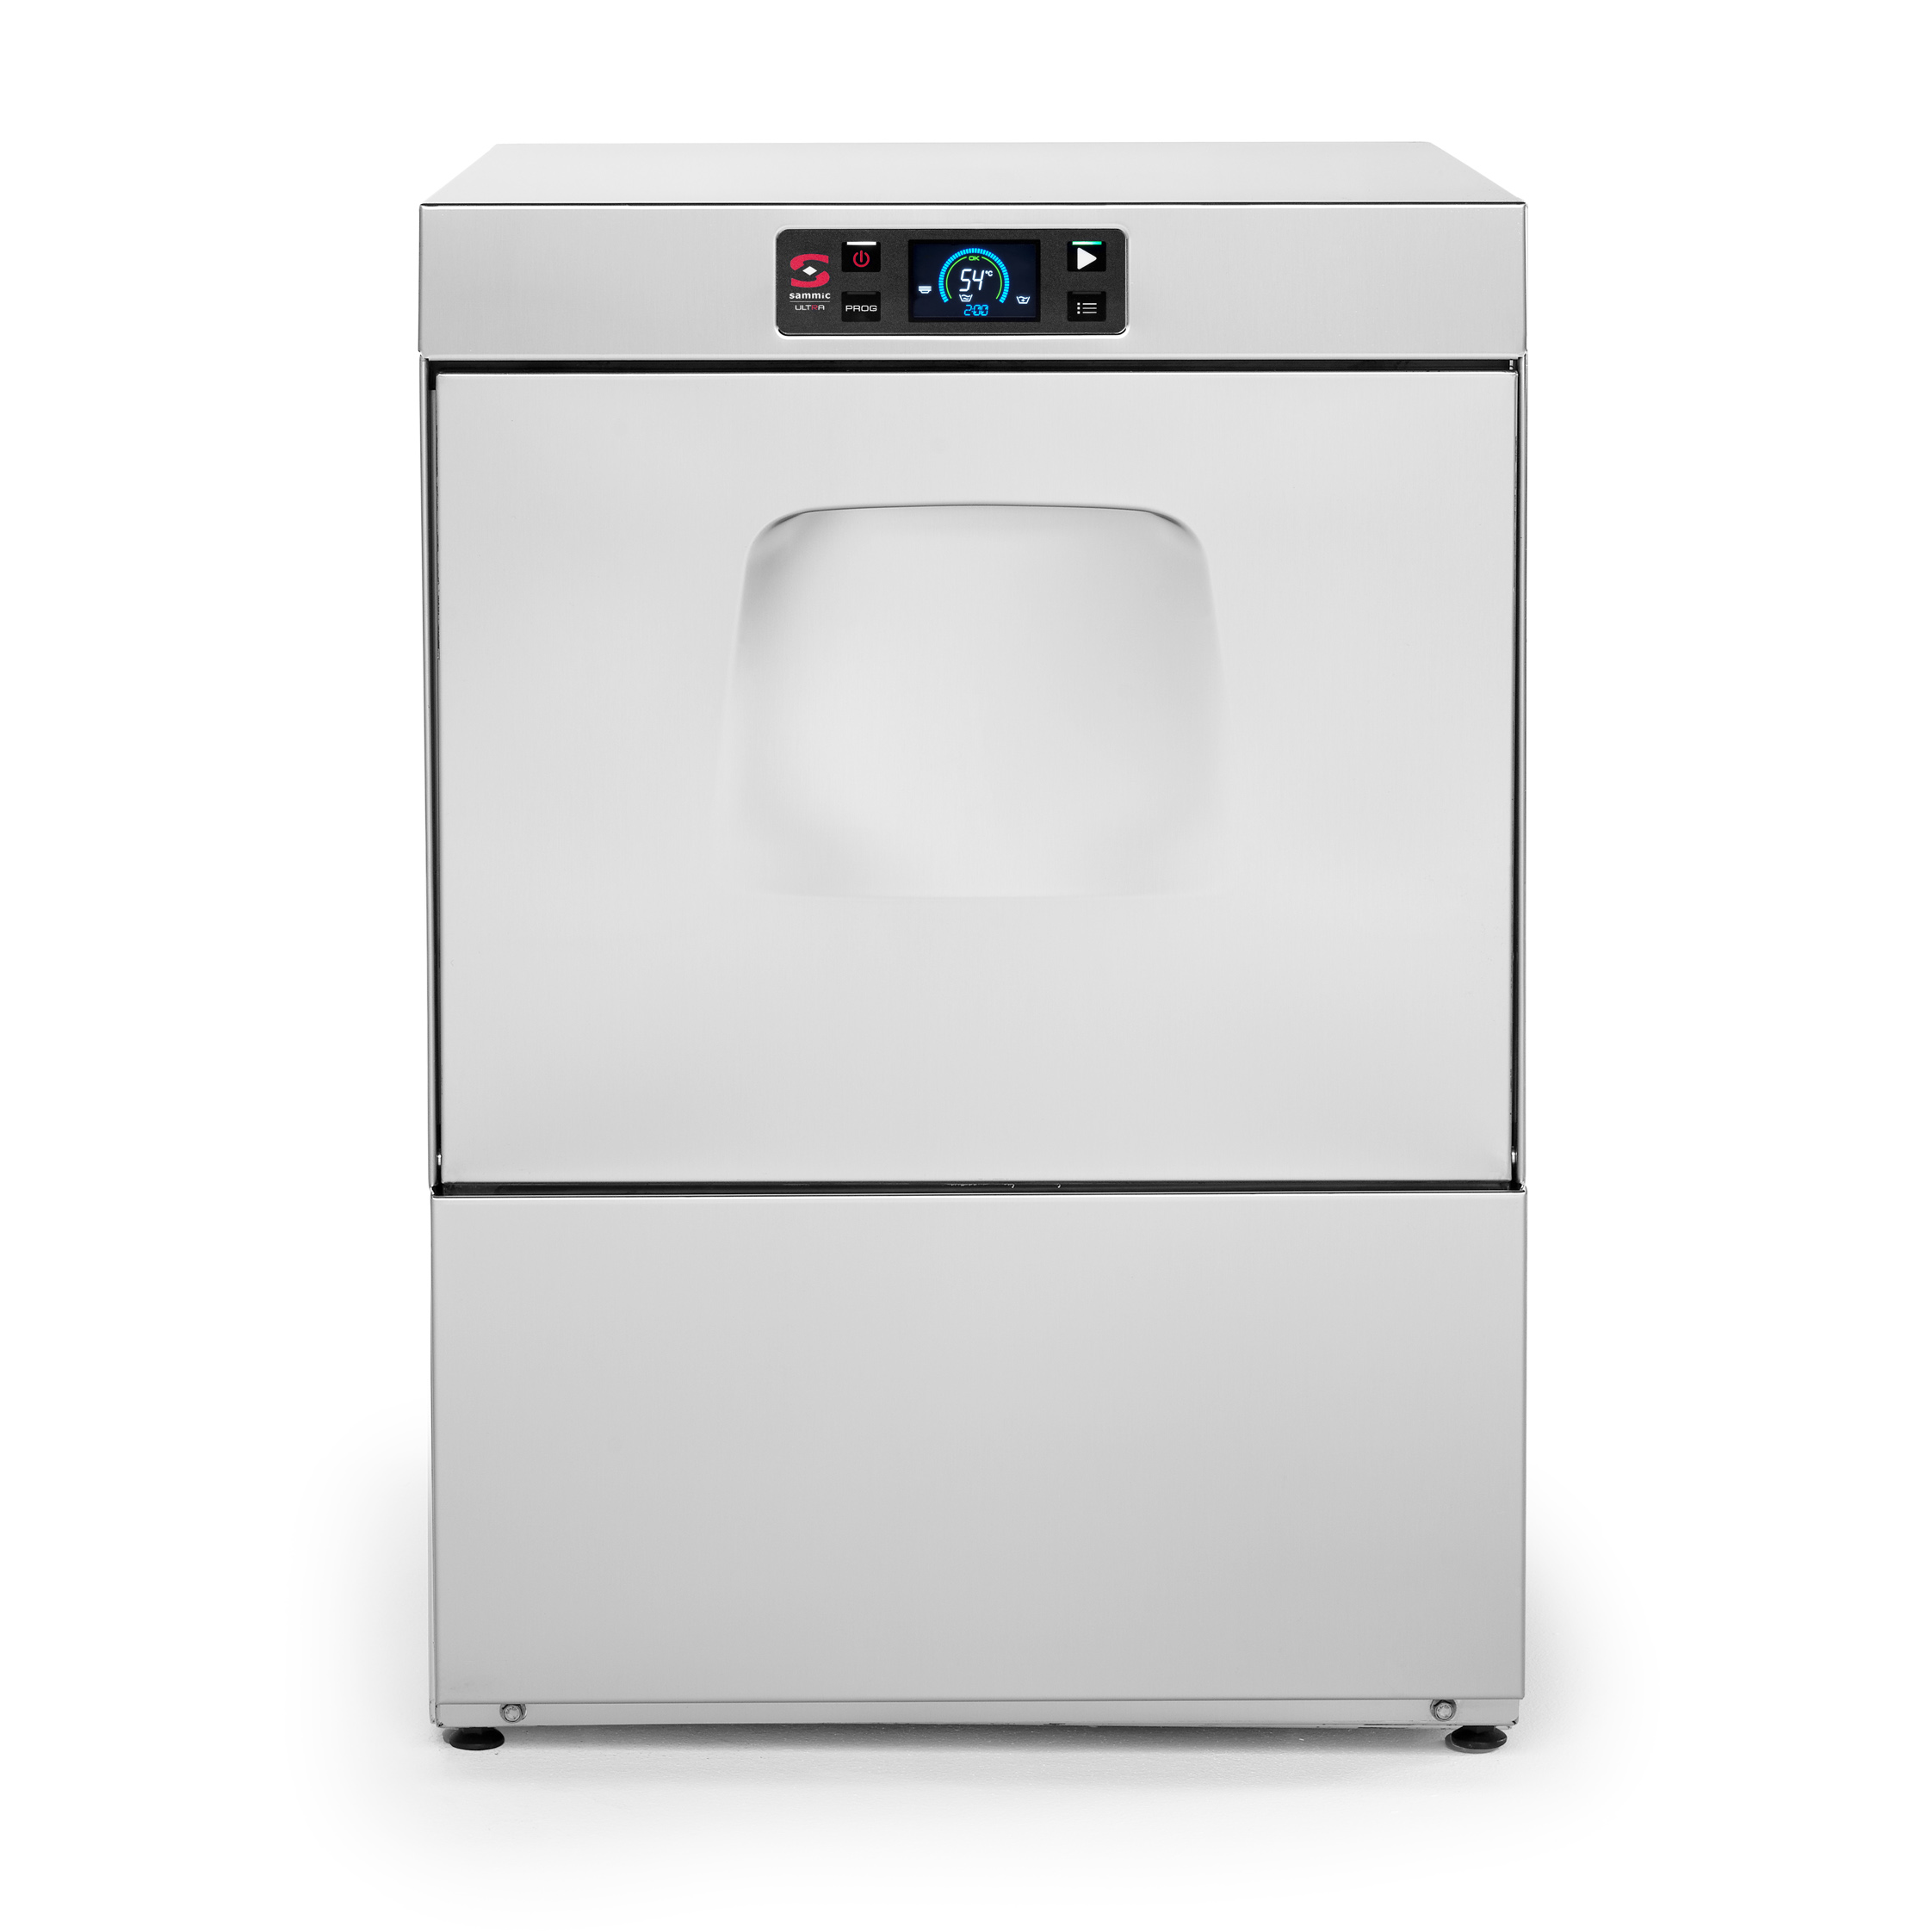 Sammic UX-50b MultiPower Dishwasher 1303226